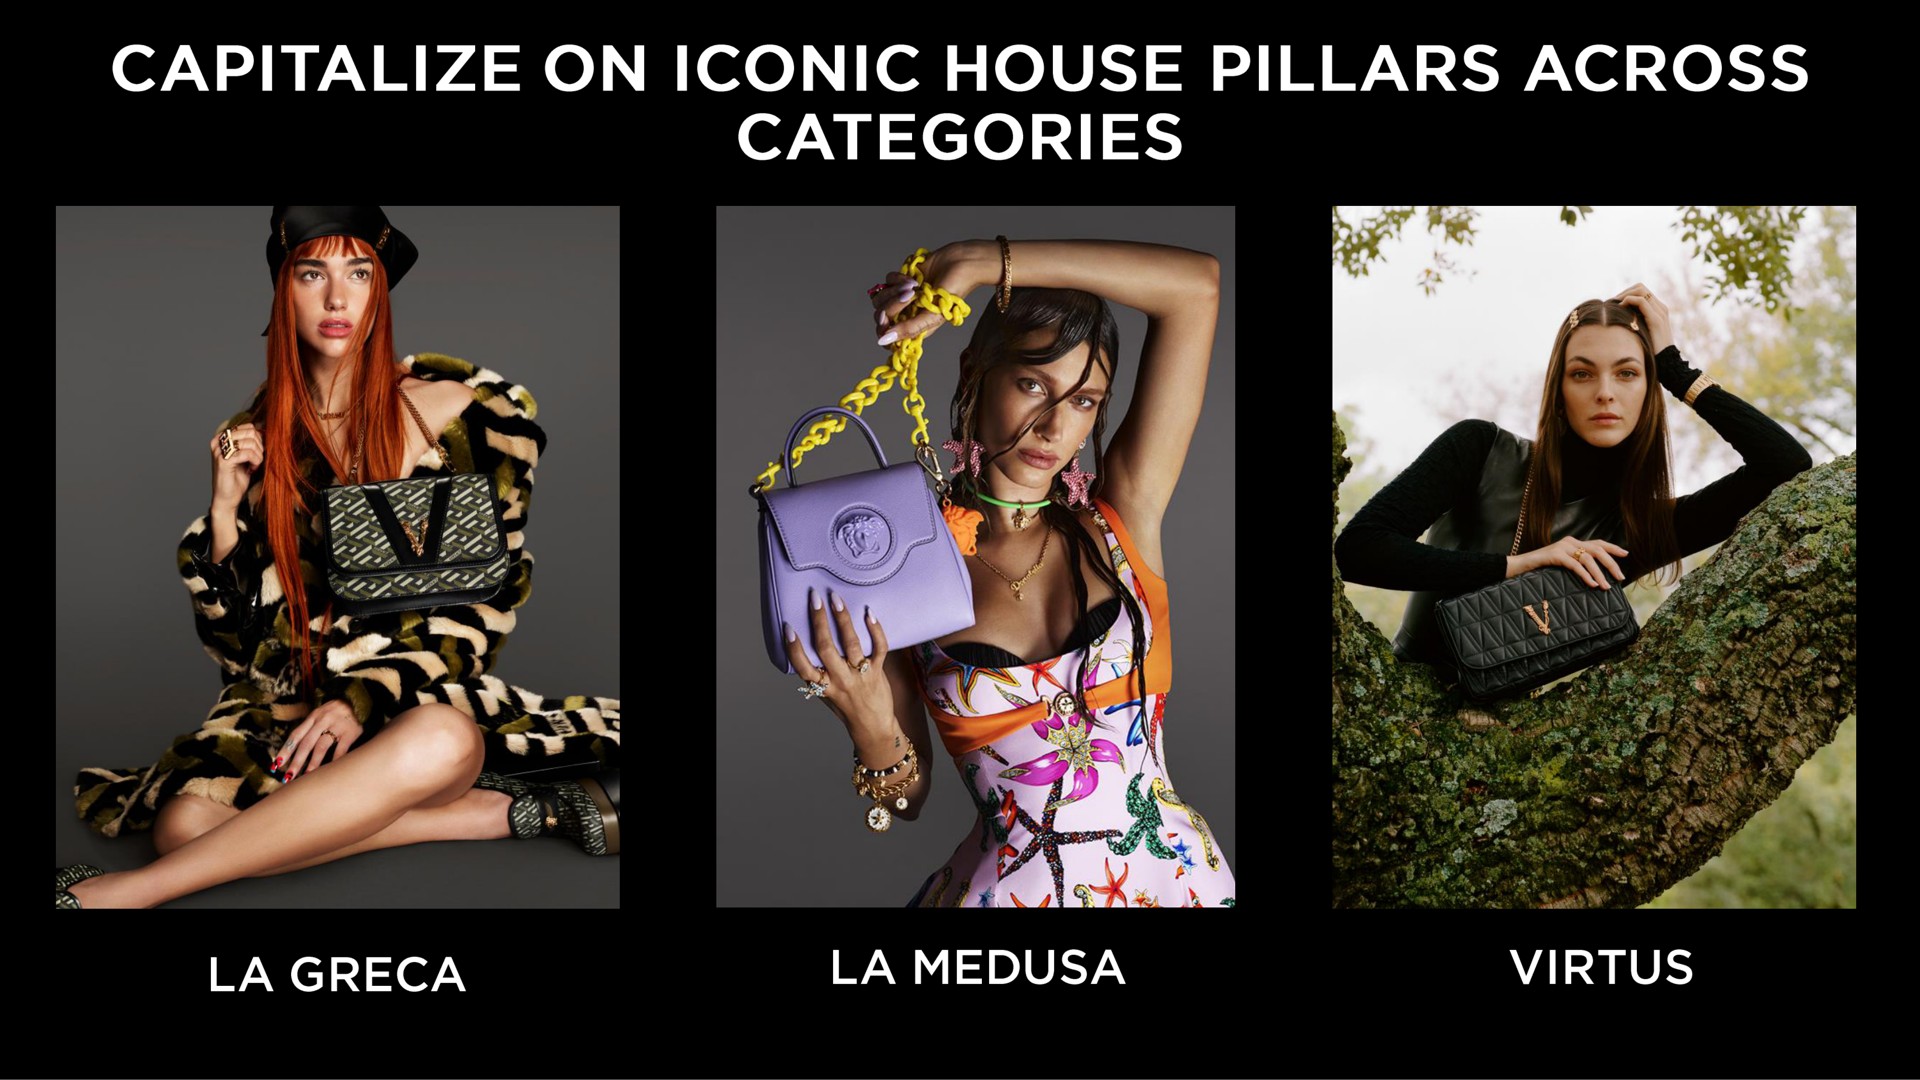 capitalize on iconic house pillars across categories | Capri Holdings